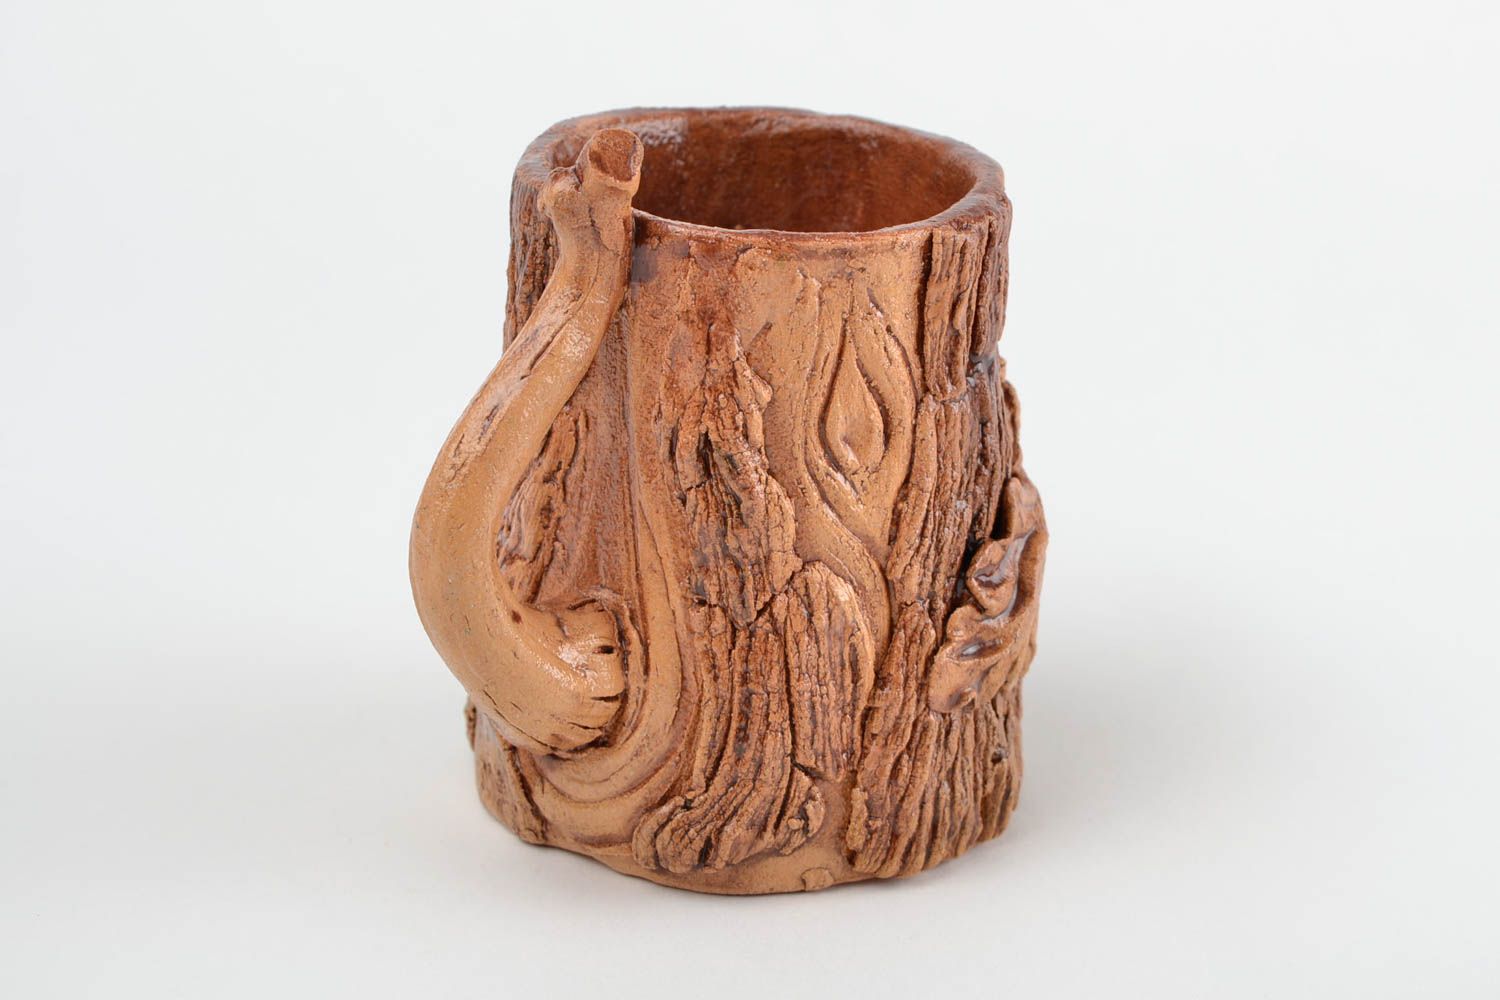 8 oz ceramic glazed forest style handmade cup 0,94 lb photo 3